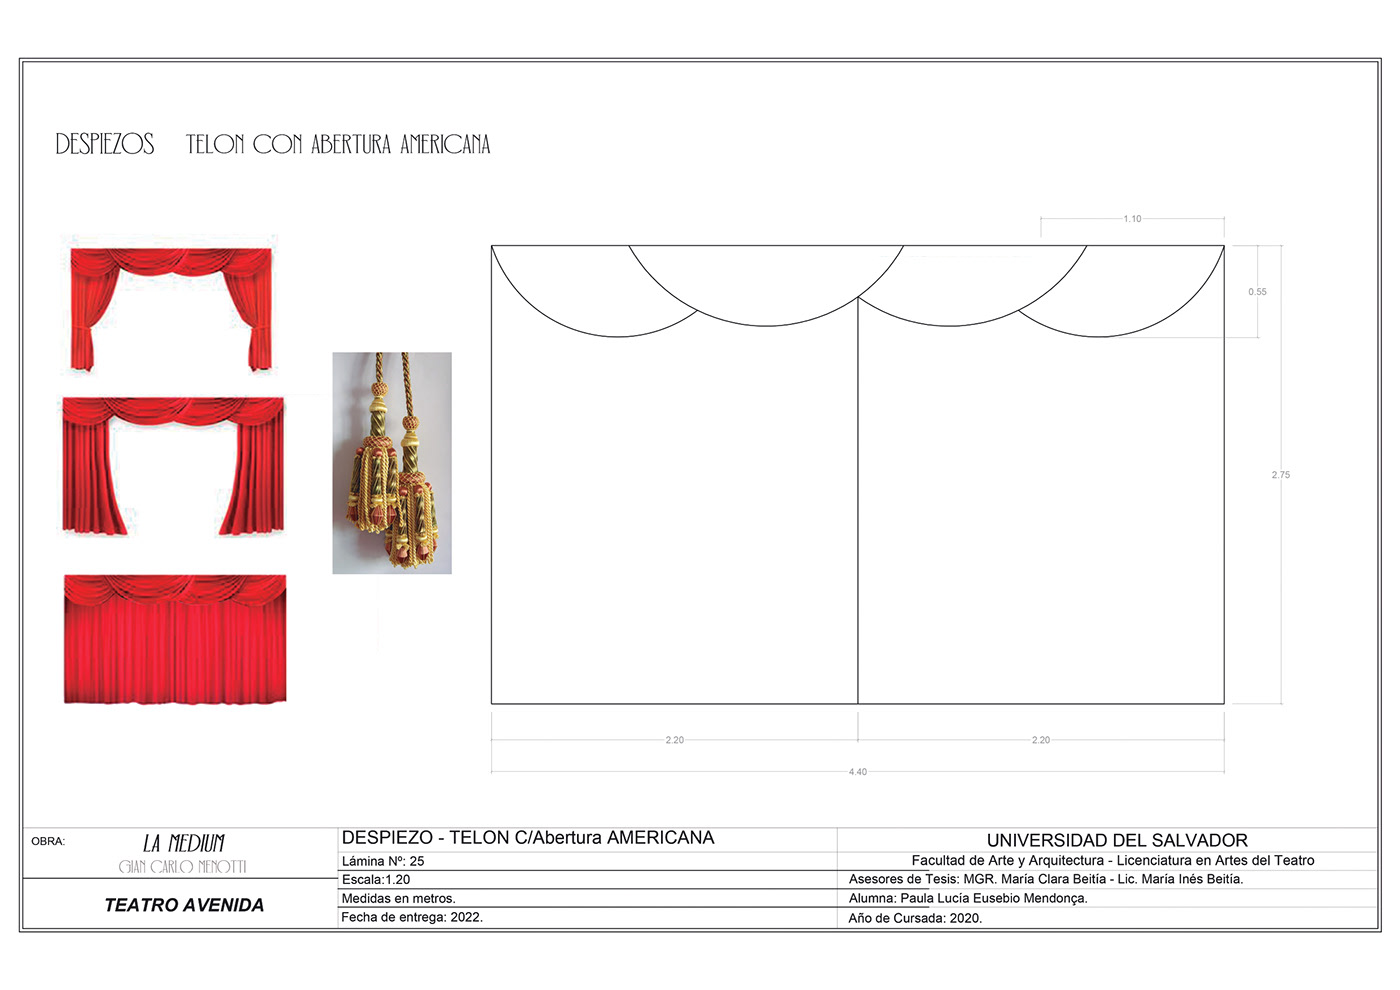 Costume Design  escenografia opera planos set design  tesis Menotti proyecto